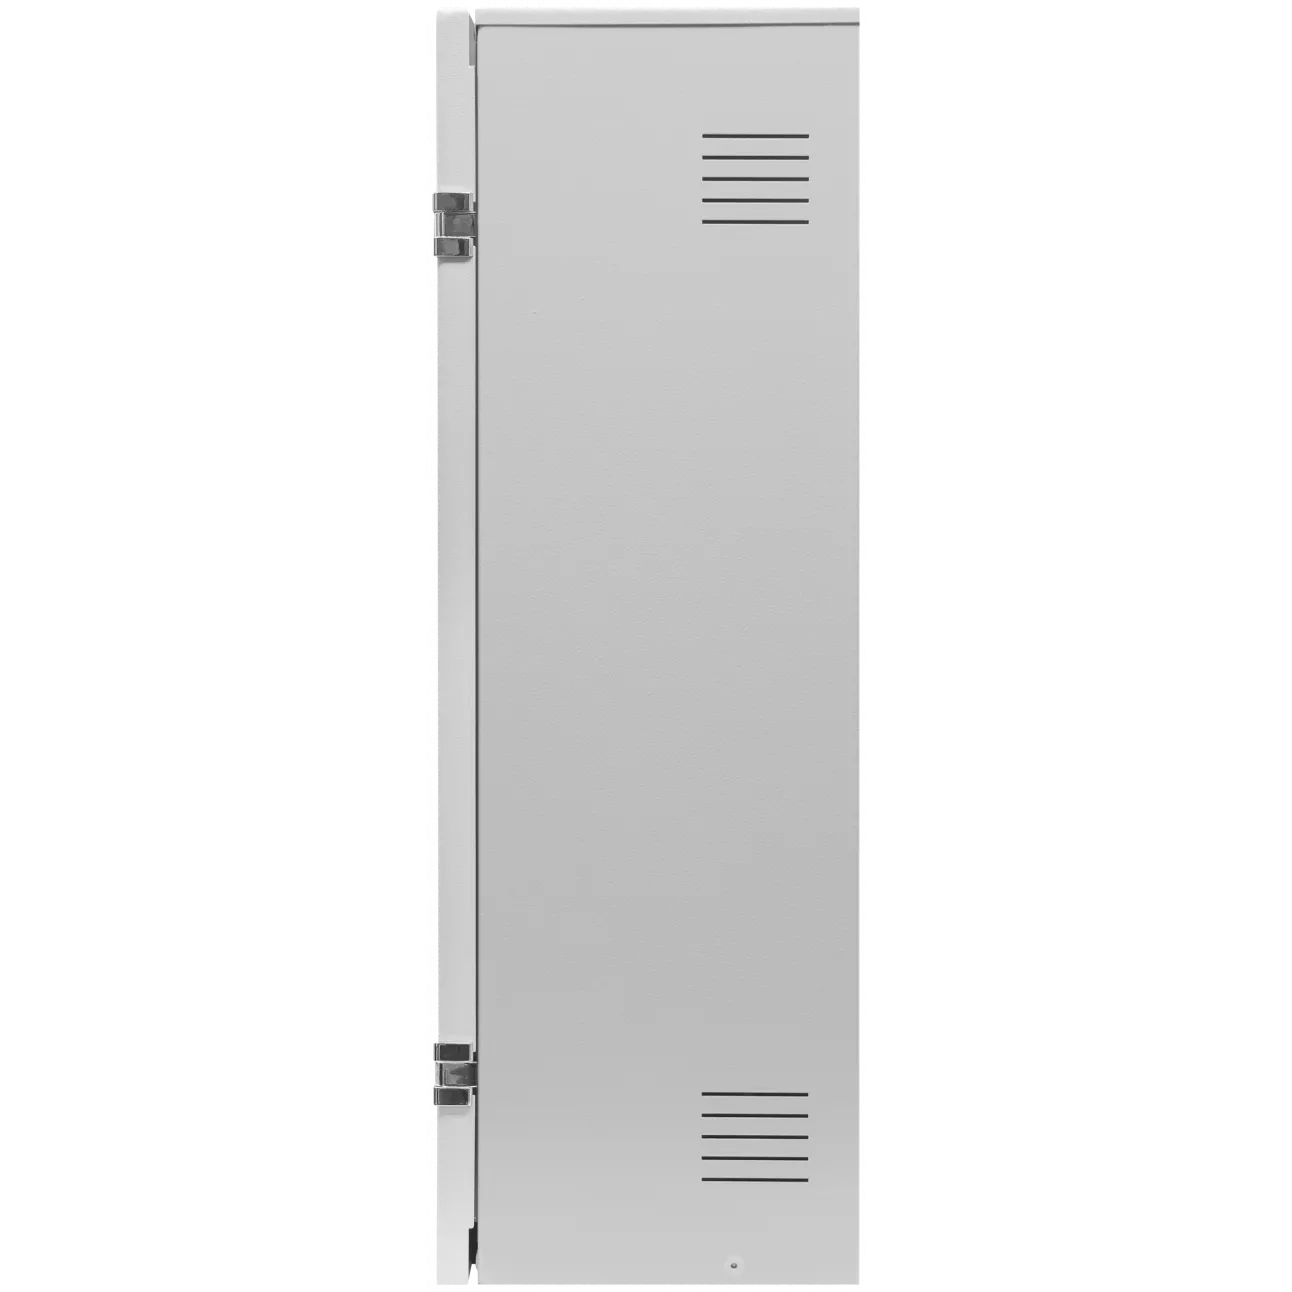 Шкаф телекоммуникационный для узла доступа 600х400x200мм, серия RT без блока питания (SNR-TWC-604020-RT-IP30)